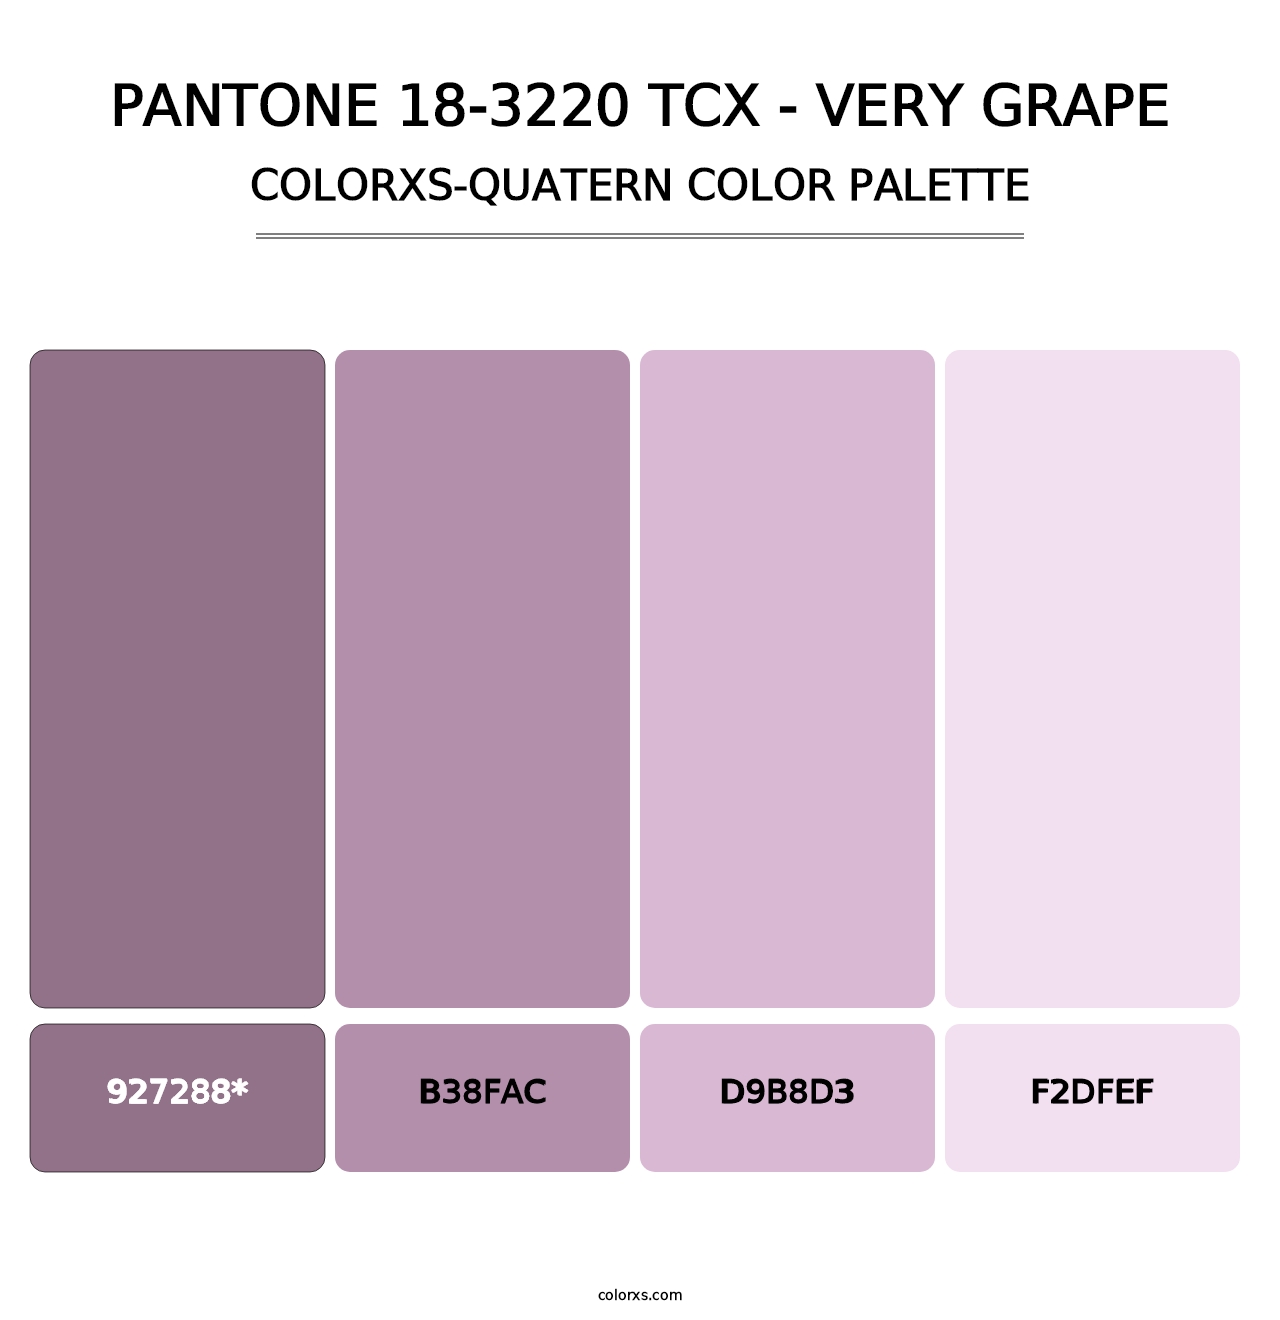 PANTONE 18-3220 TCX - Very Grape - Colorxs Quatern Palette